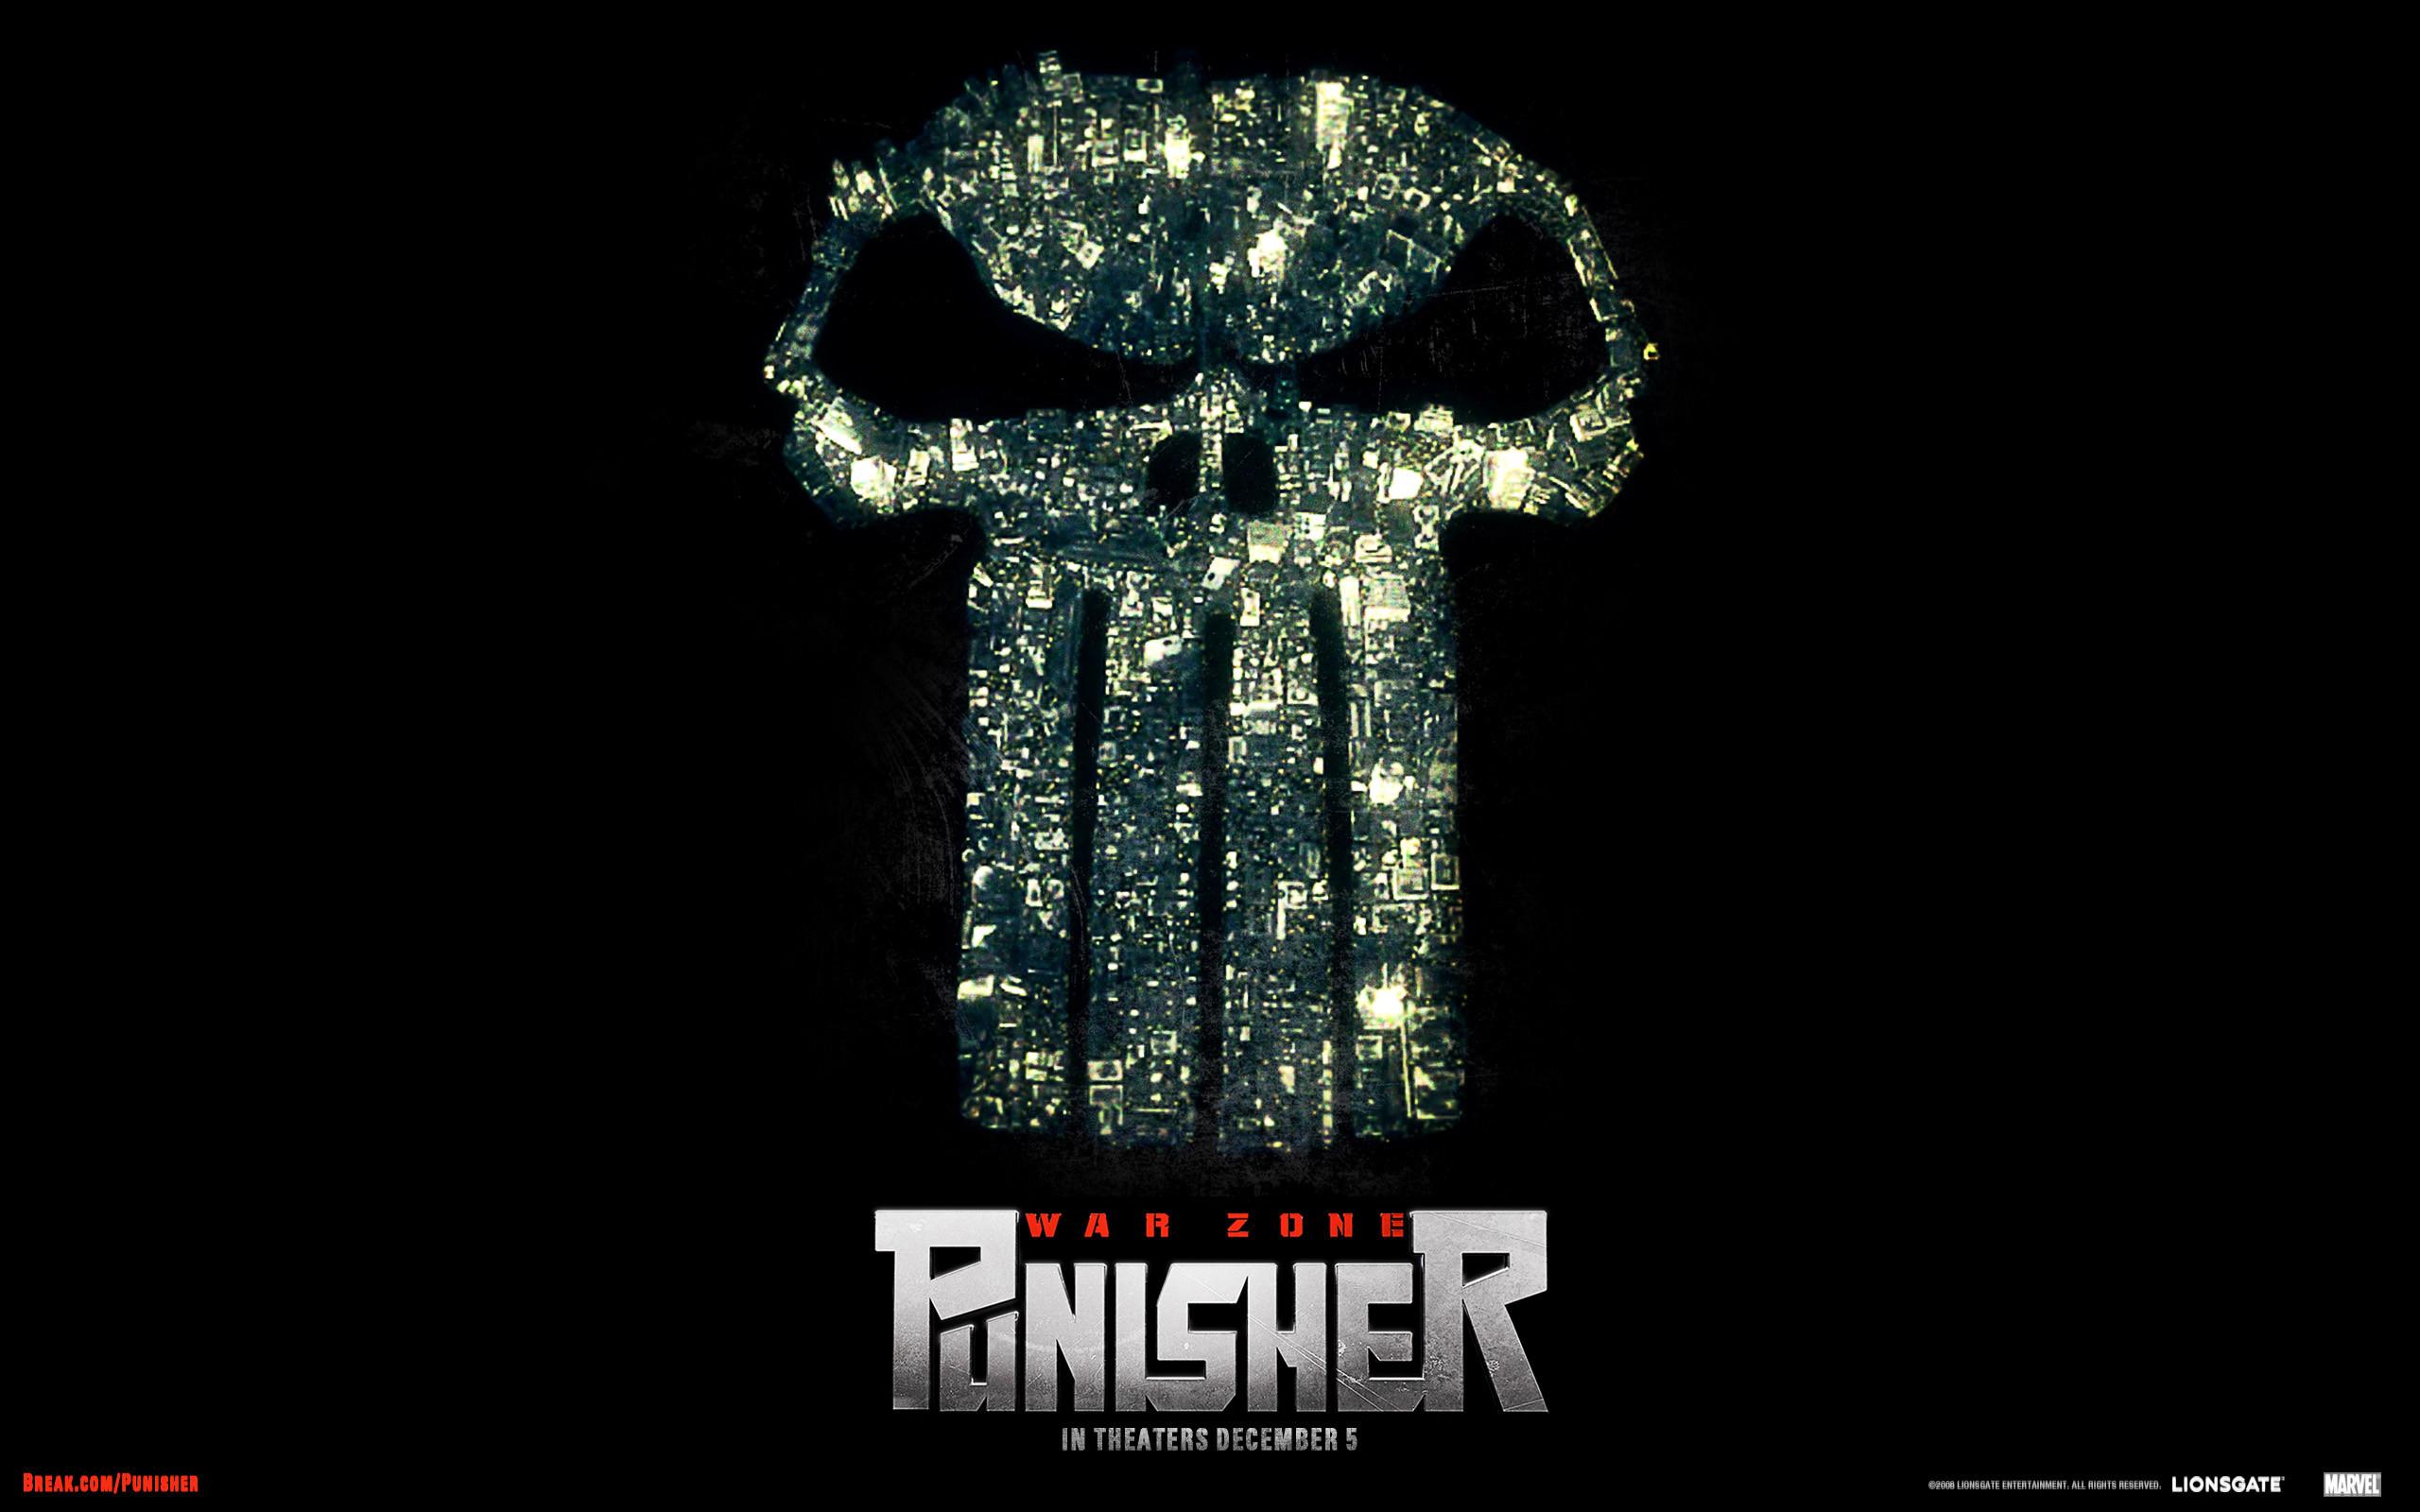 Punisher HD Wallpaper